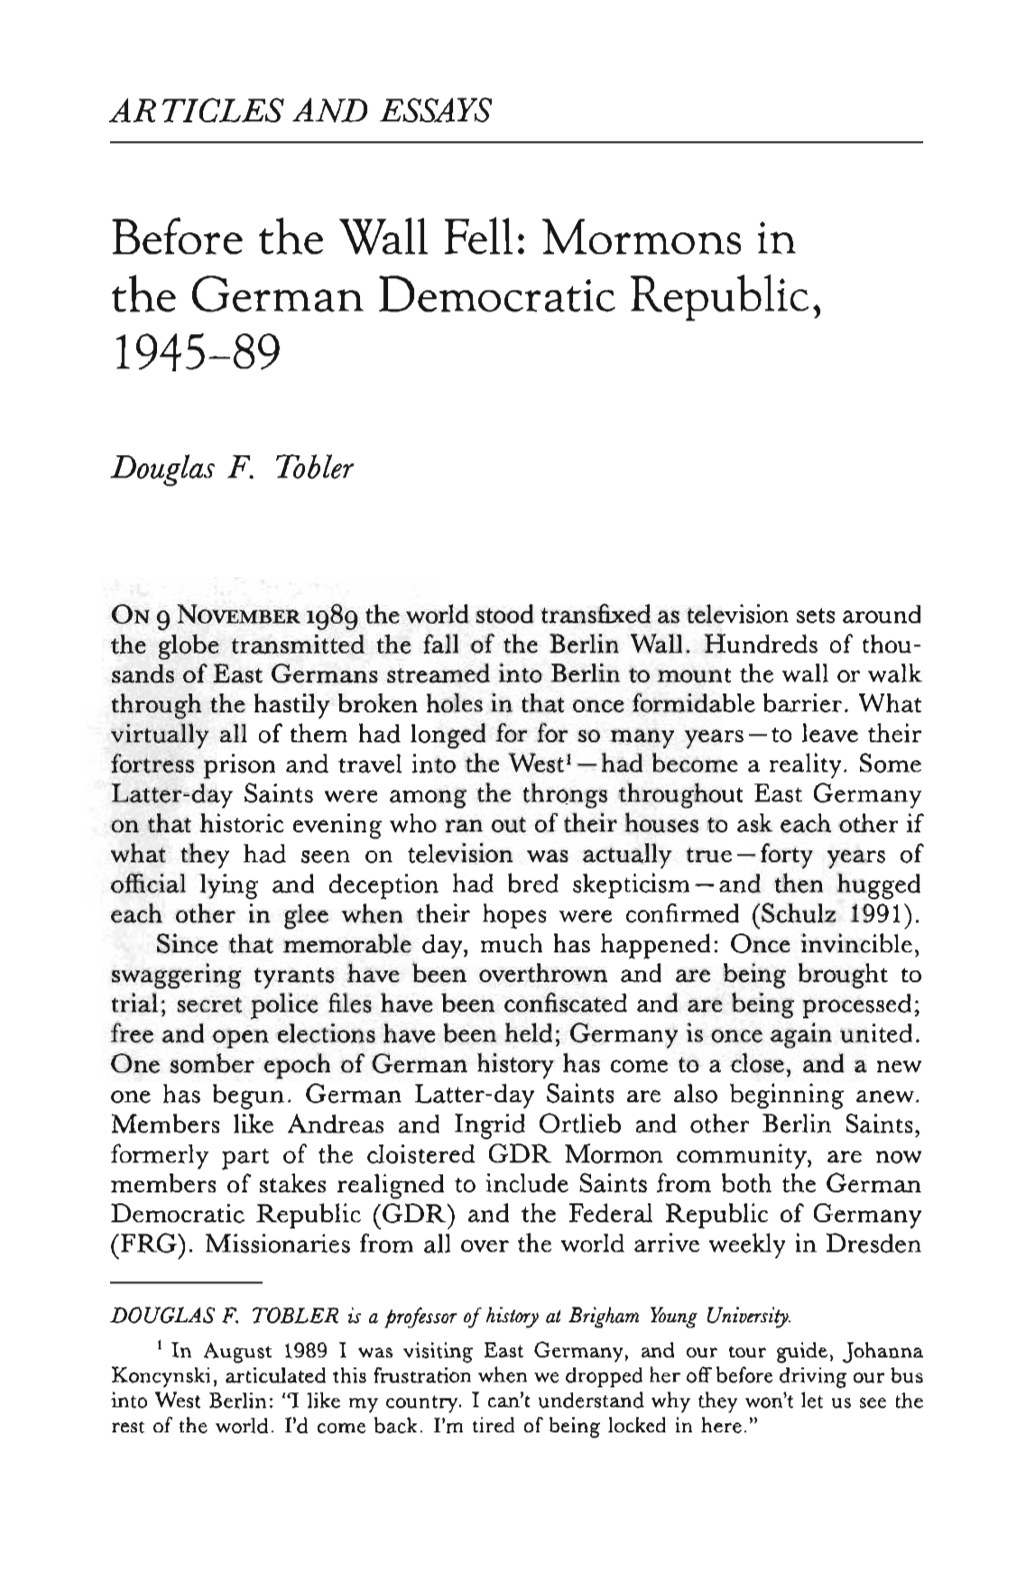 Mormons in the German Democratic Republic, 1945-89